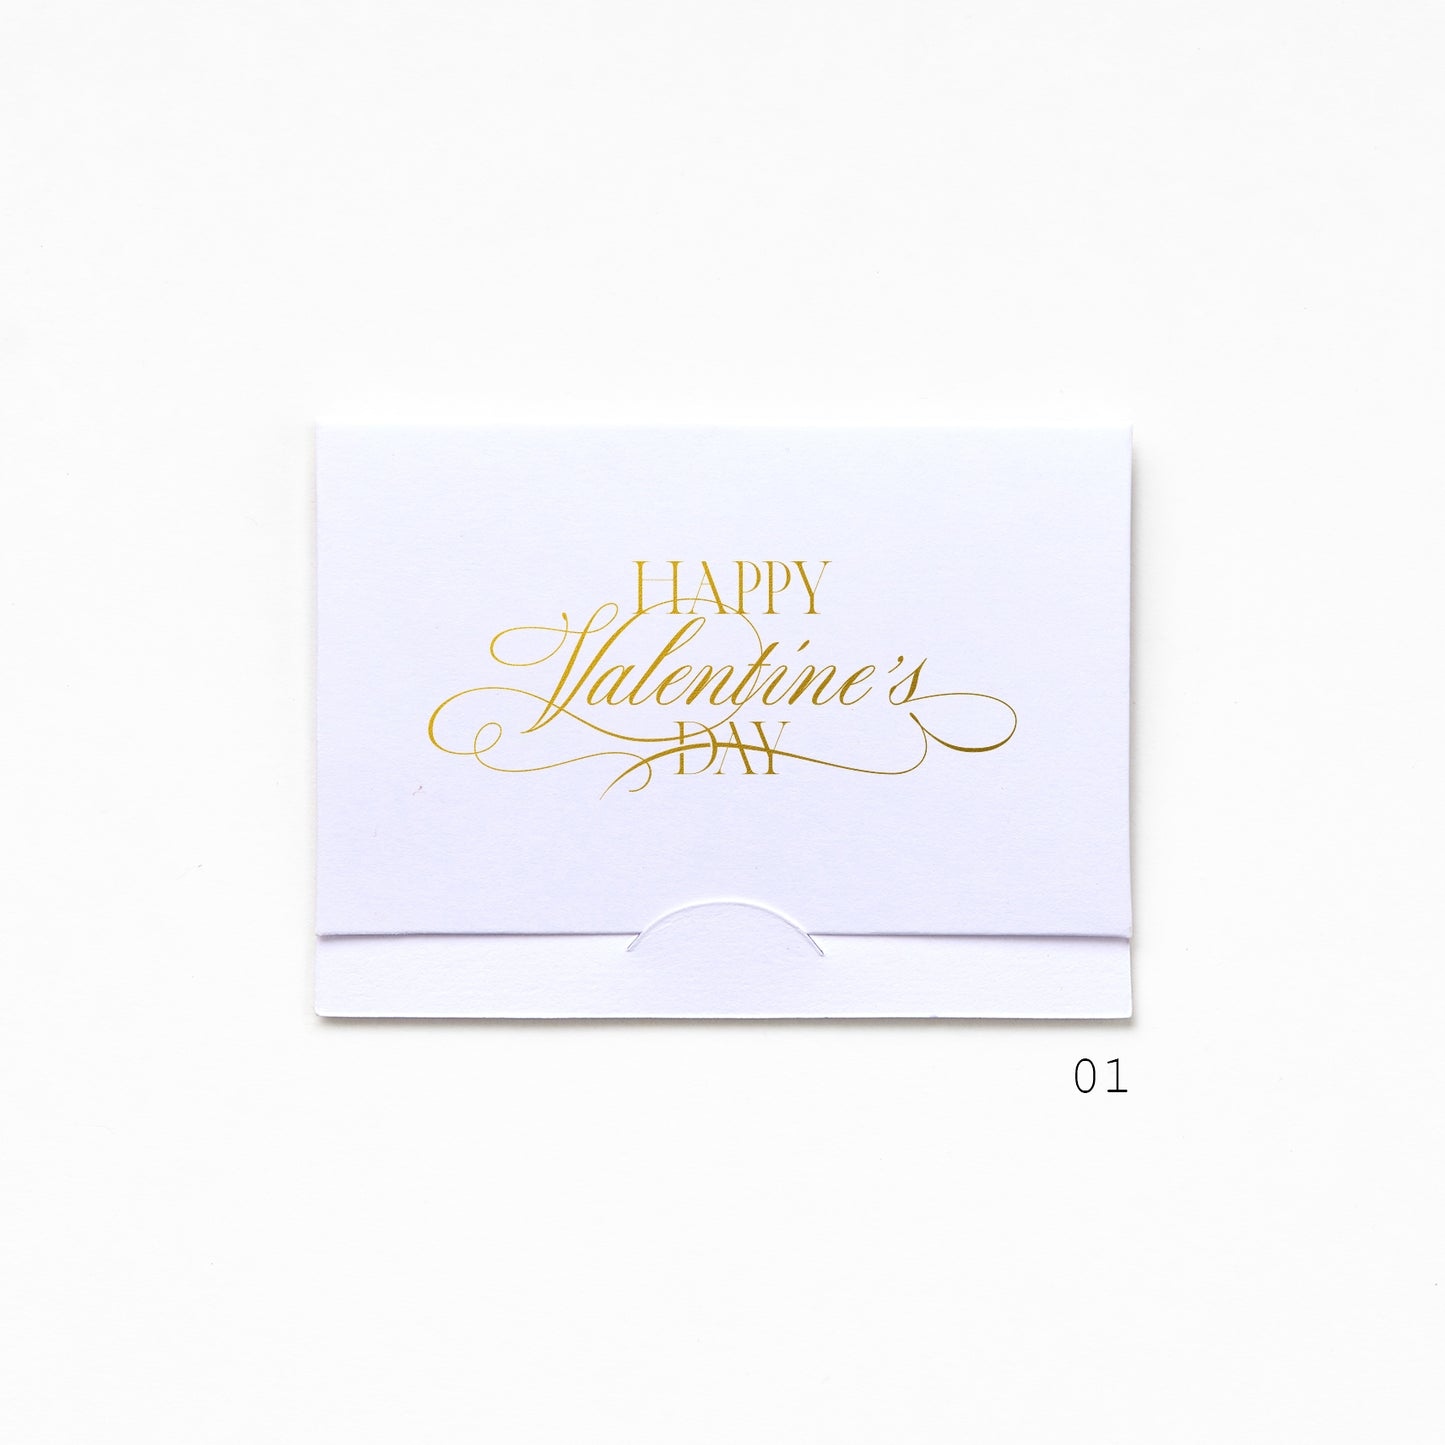 Pocket Greeting Card - Happy Valentine's Day 01